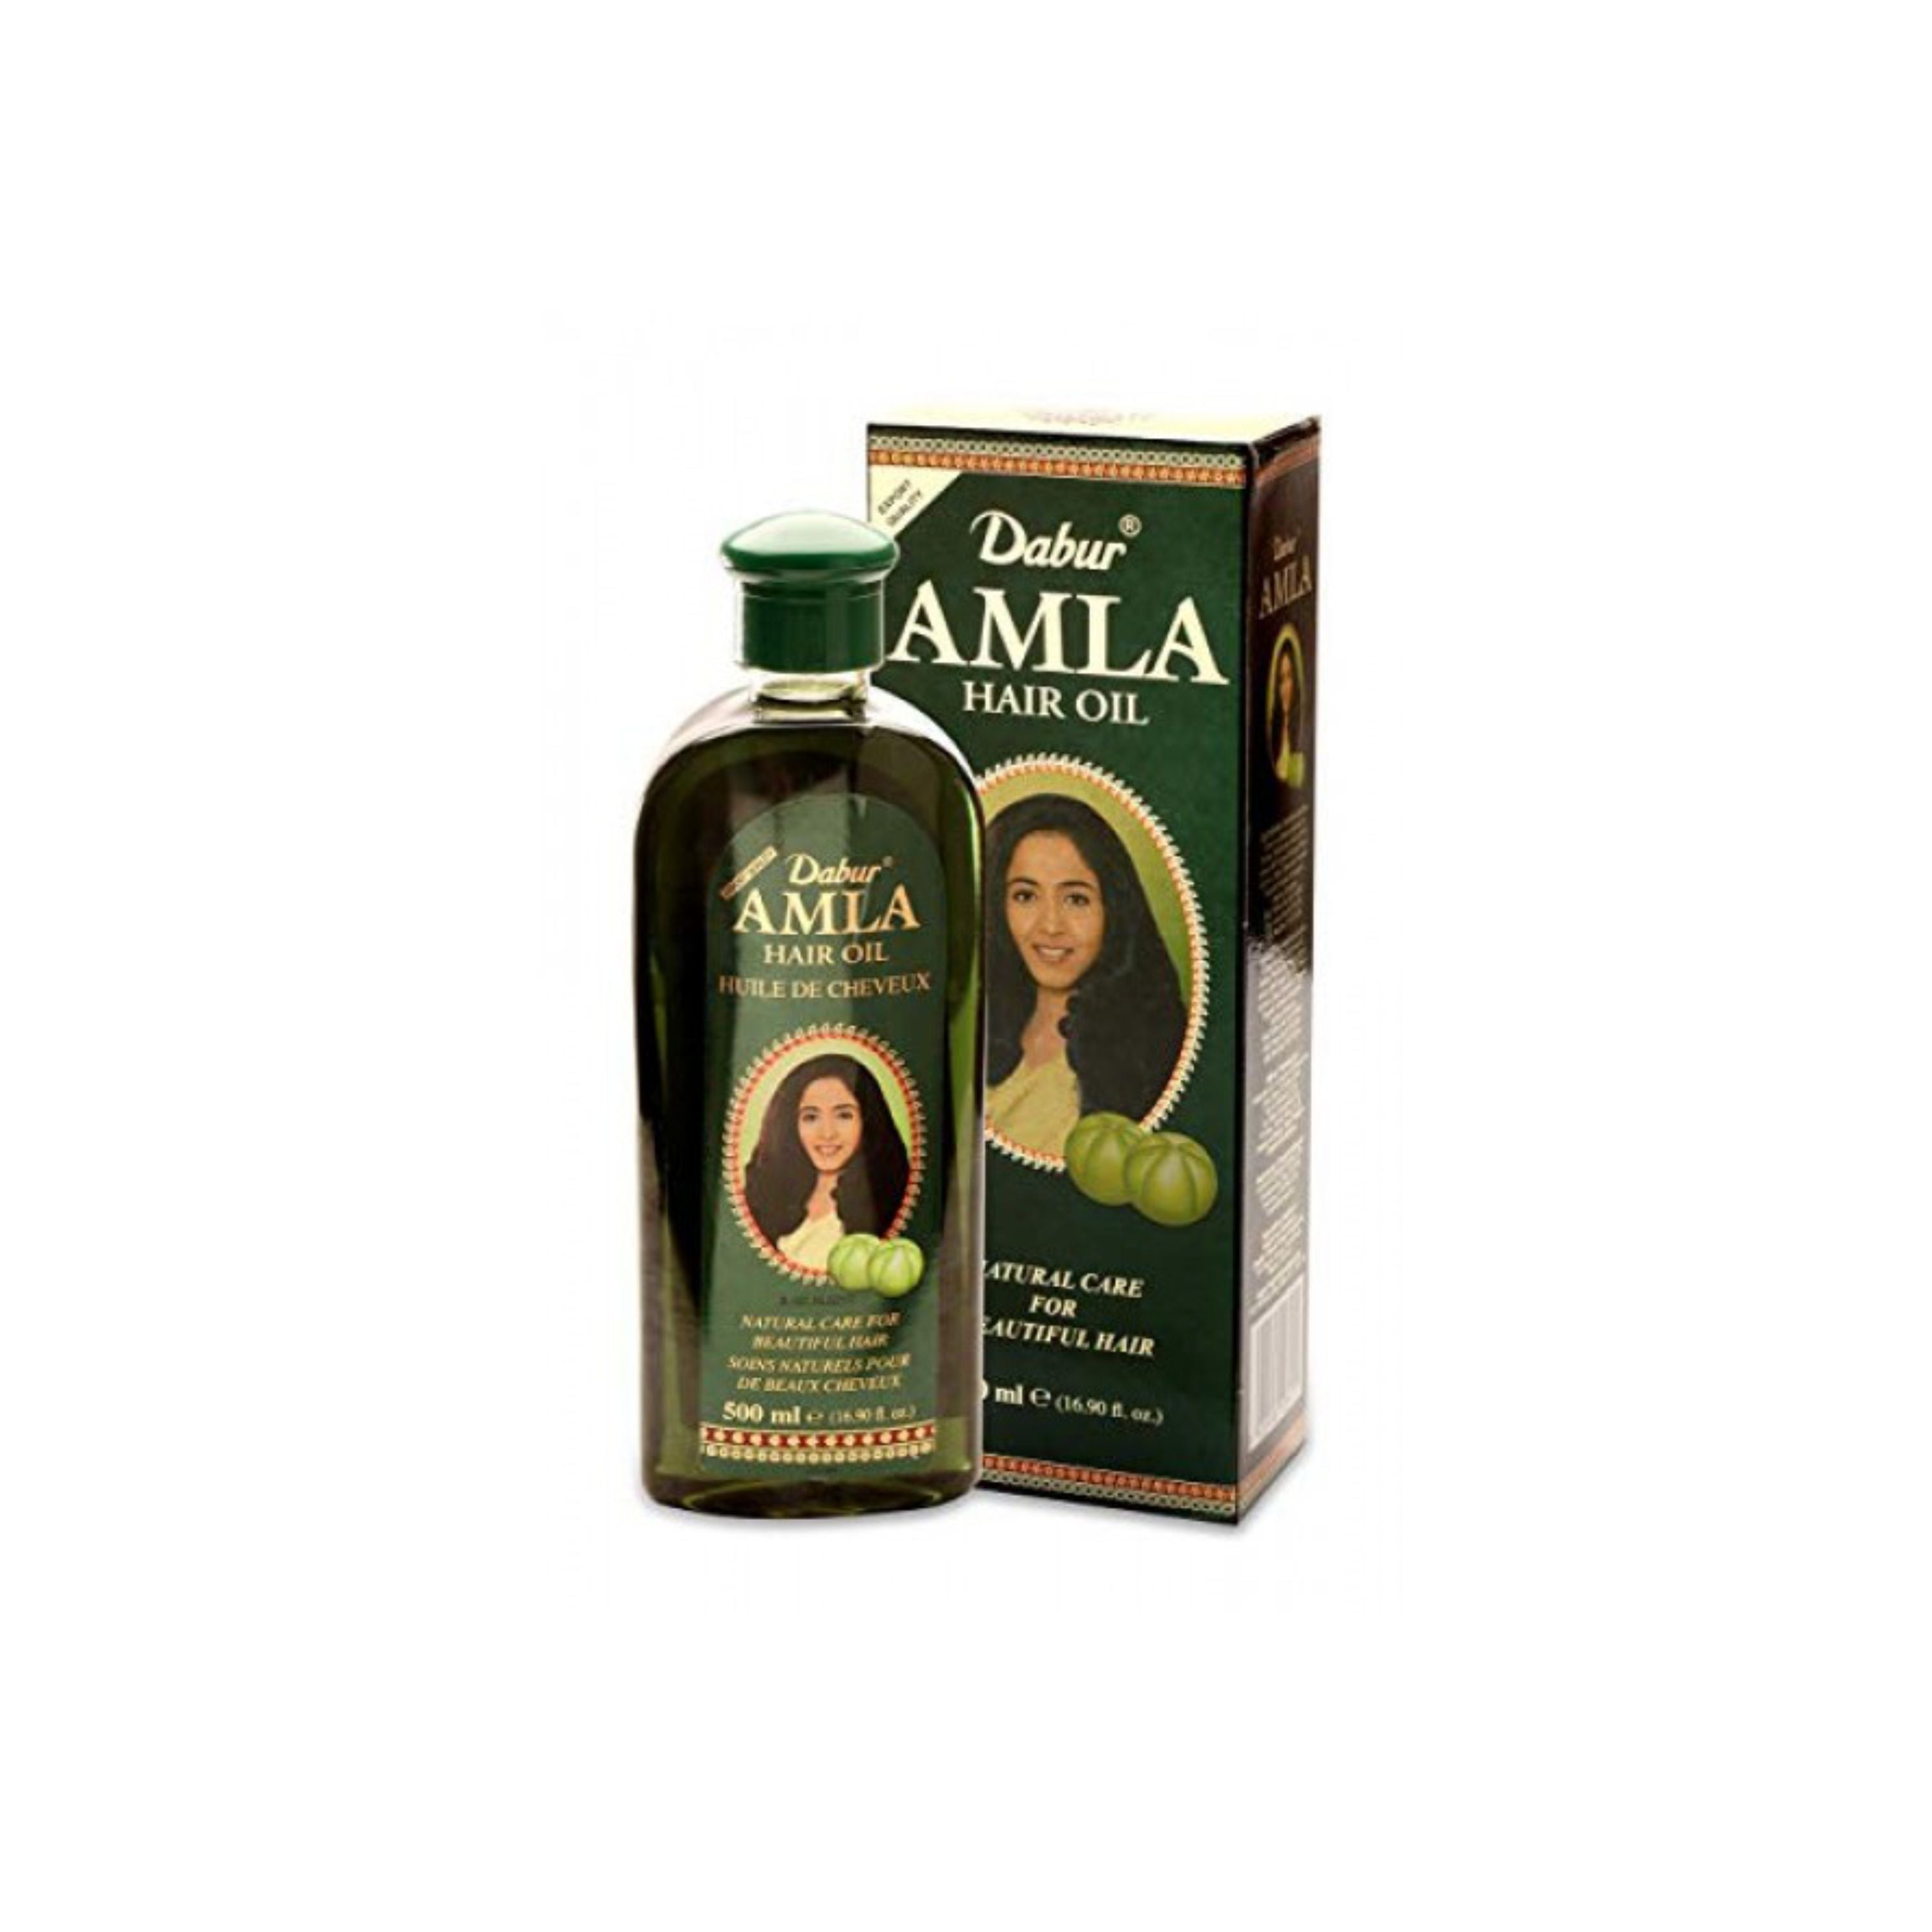 Dabur - 100ml Amla Hair Oil